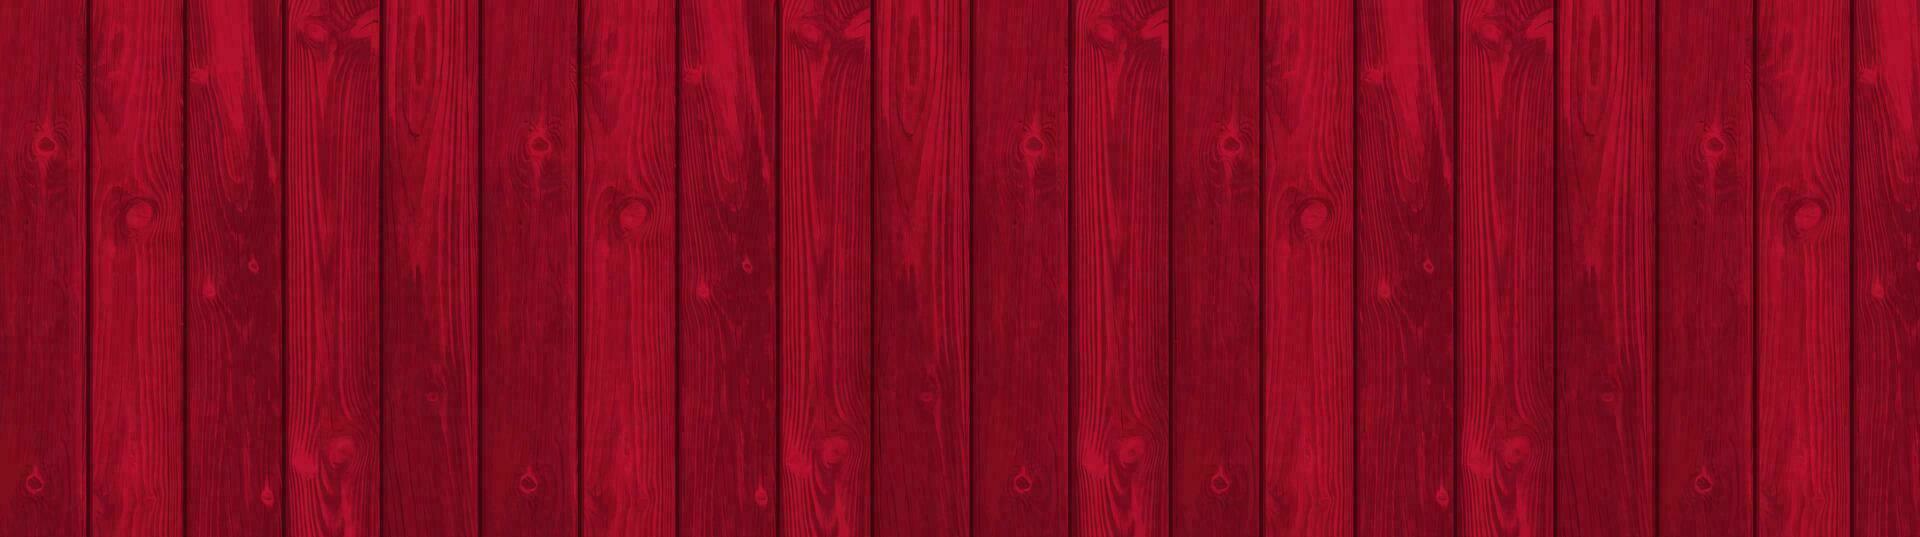 Viva magenta red wood texture pattern background vector